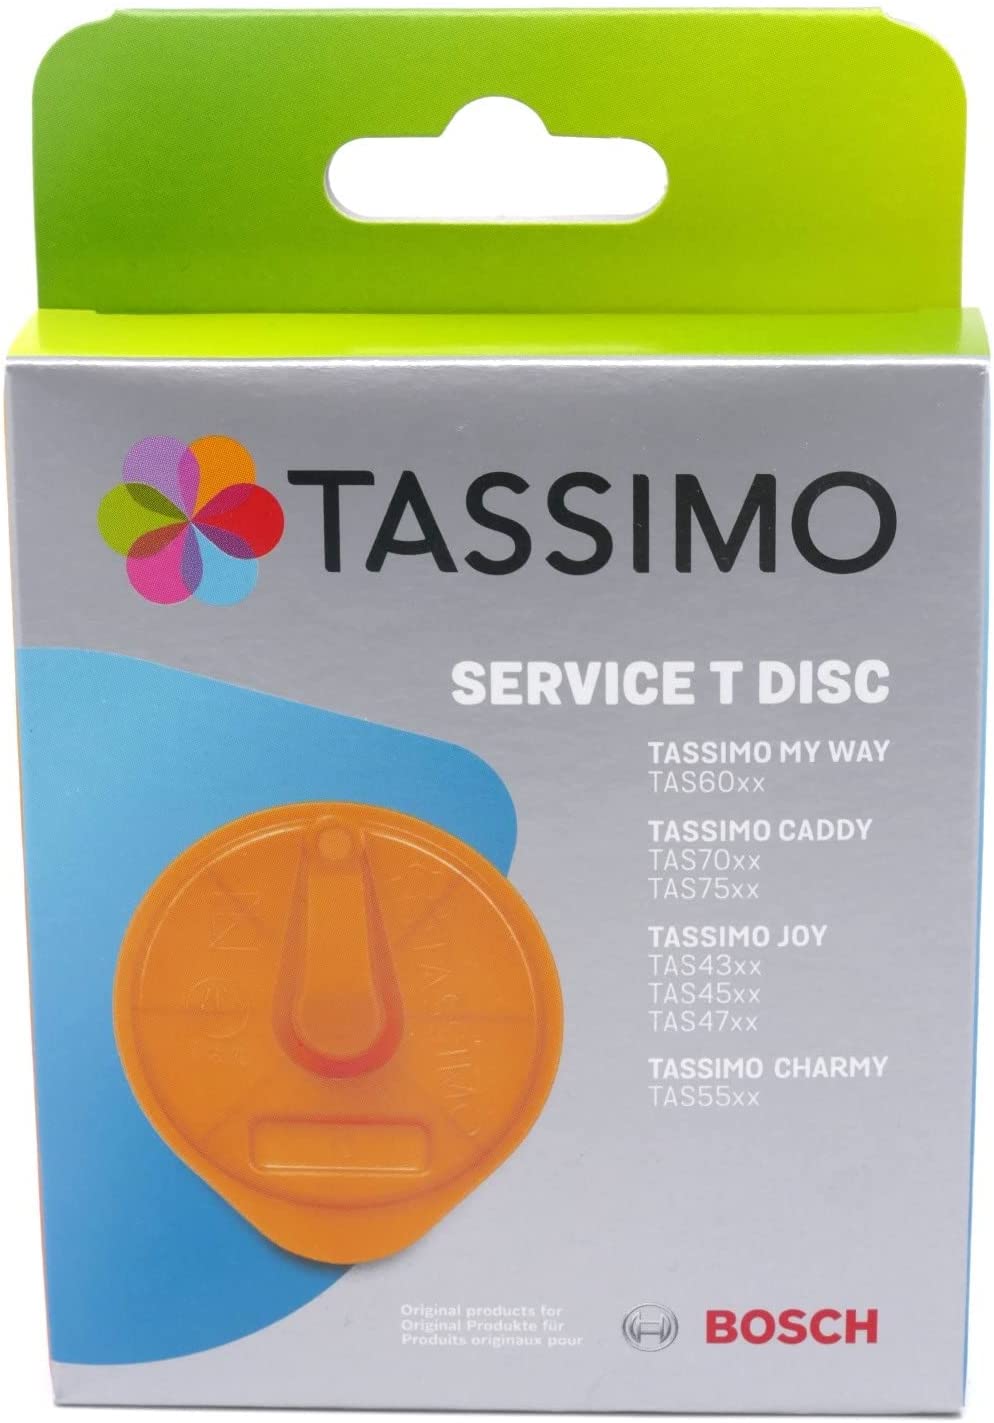 Tassimo T Disc Genuine Bosch Part 624088